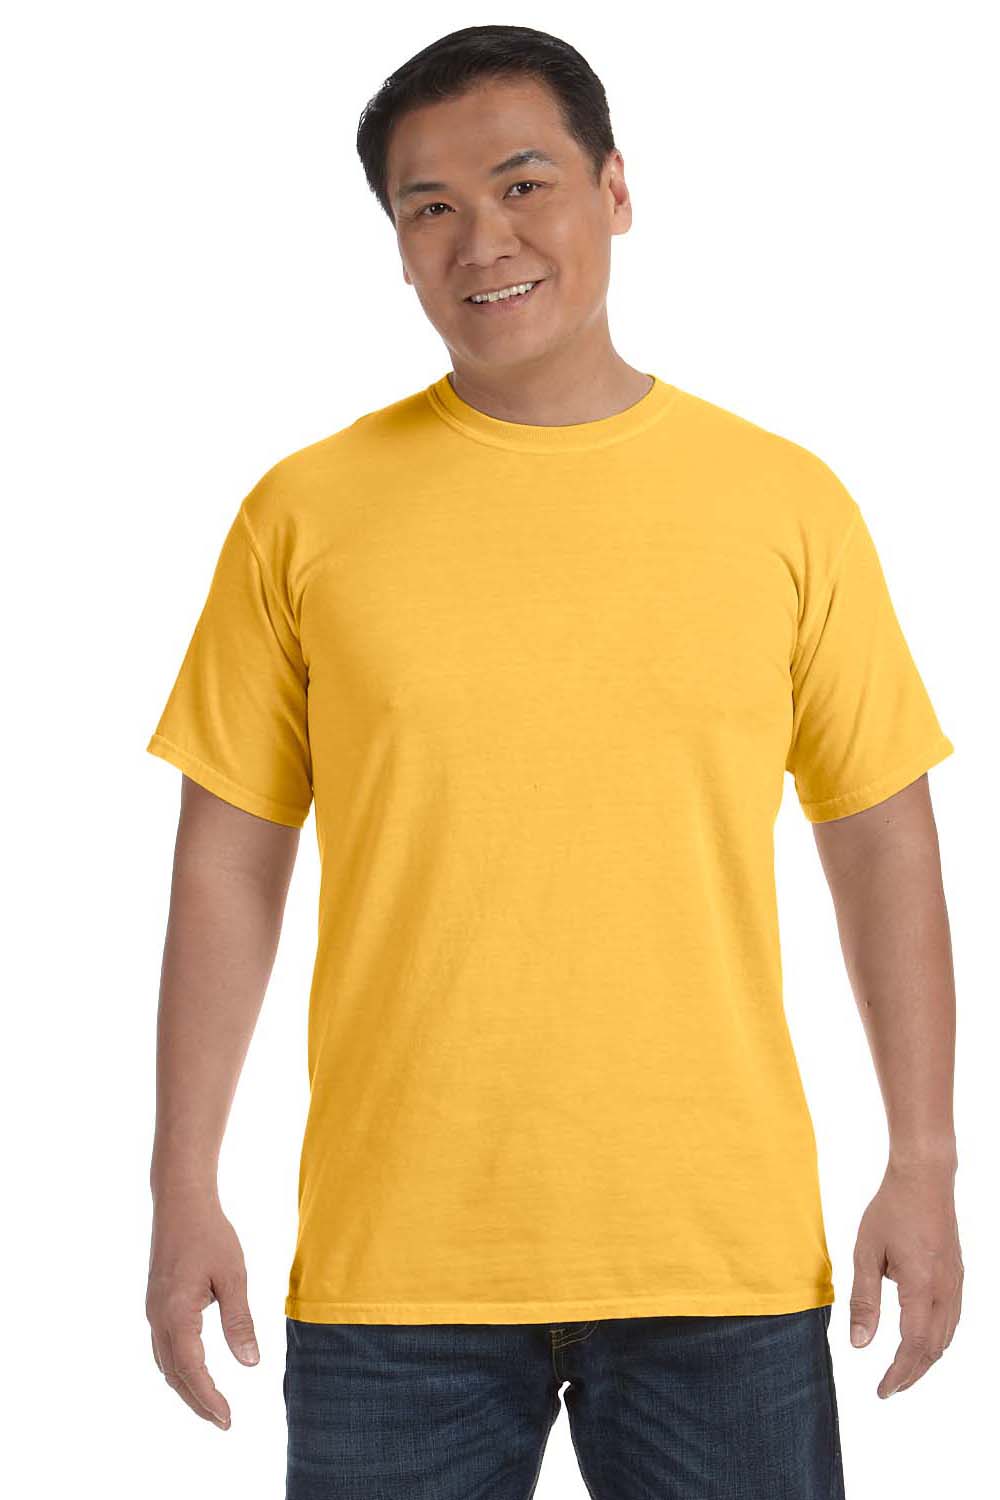 Comfort Colors C1717 Mens Short Sleeve Crewneck T-Shirt Citrus Yellow Front